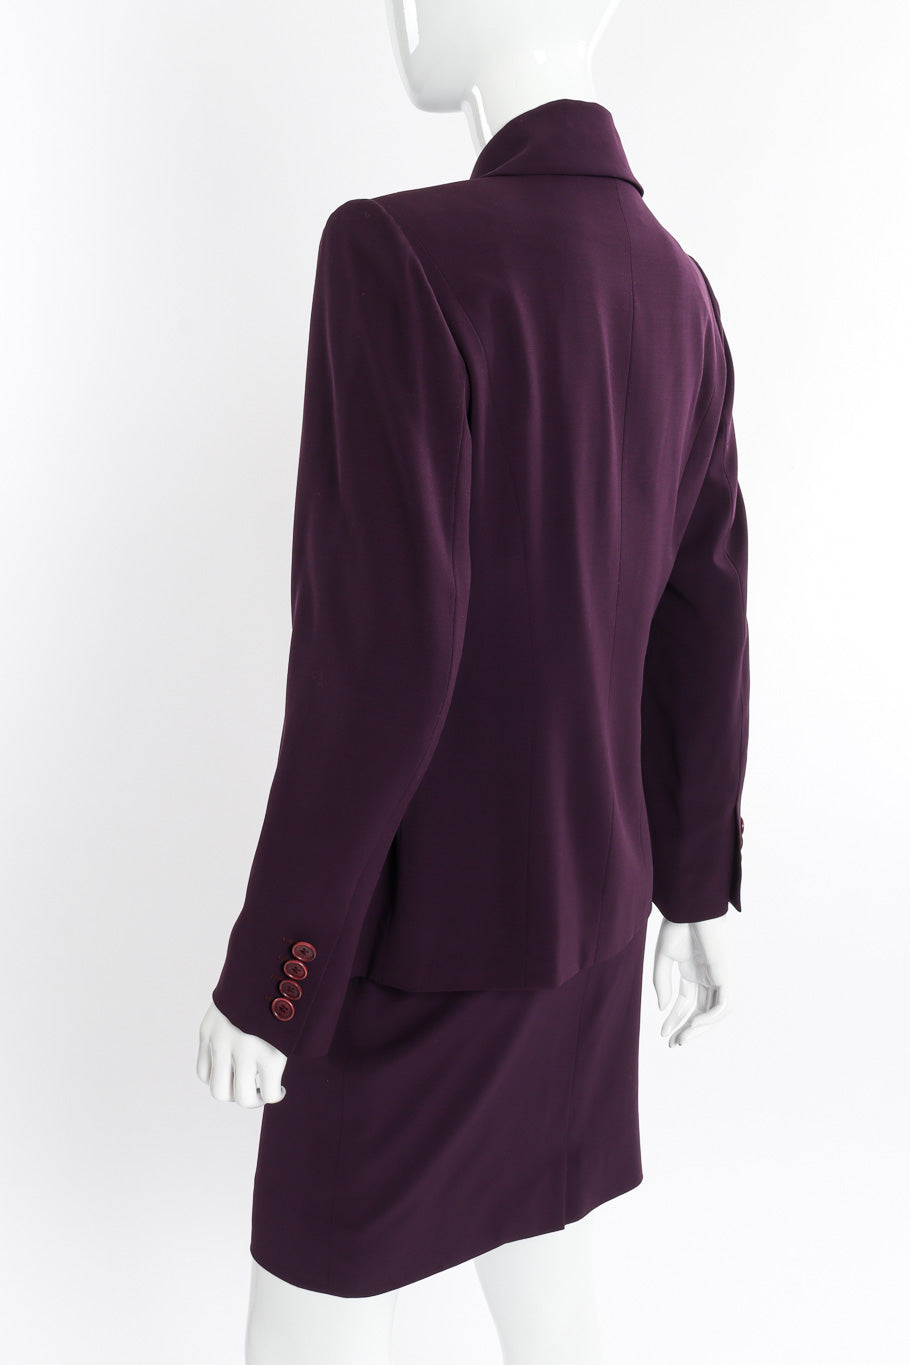 Vintage Hermés Asymmetrical Blazer and Skirt Set 3/4 back view on mannequin @recessla